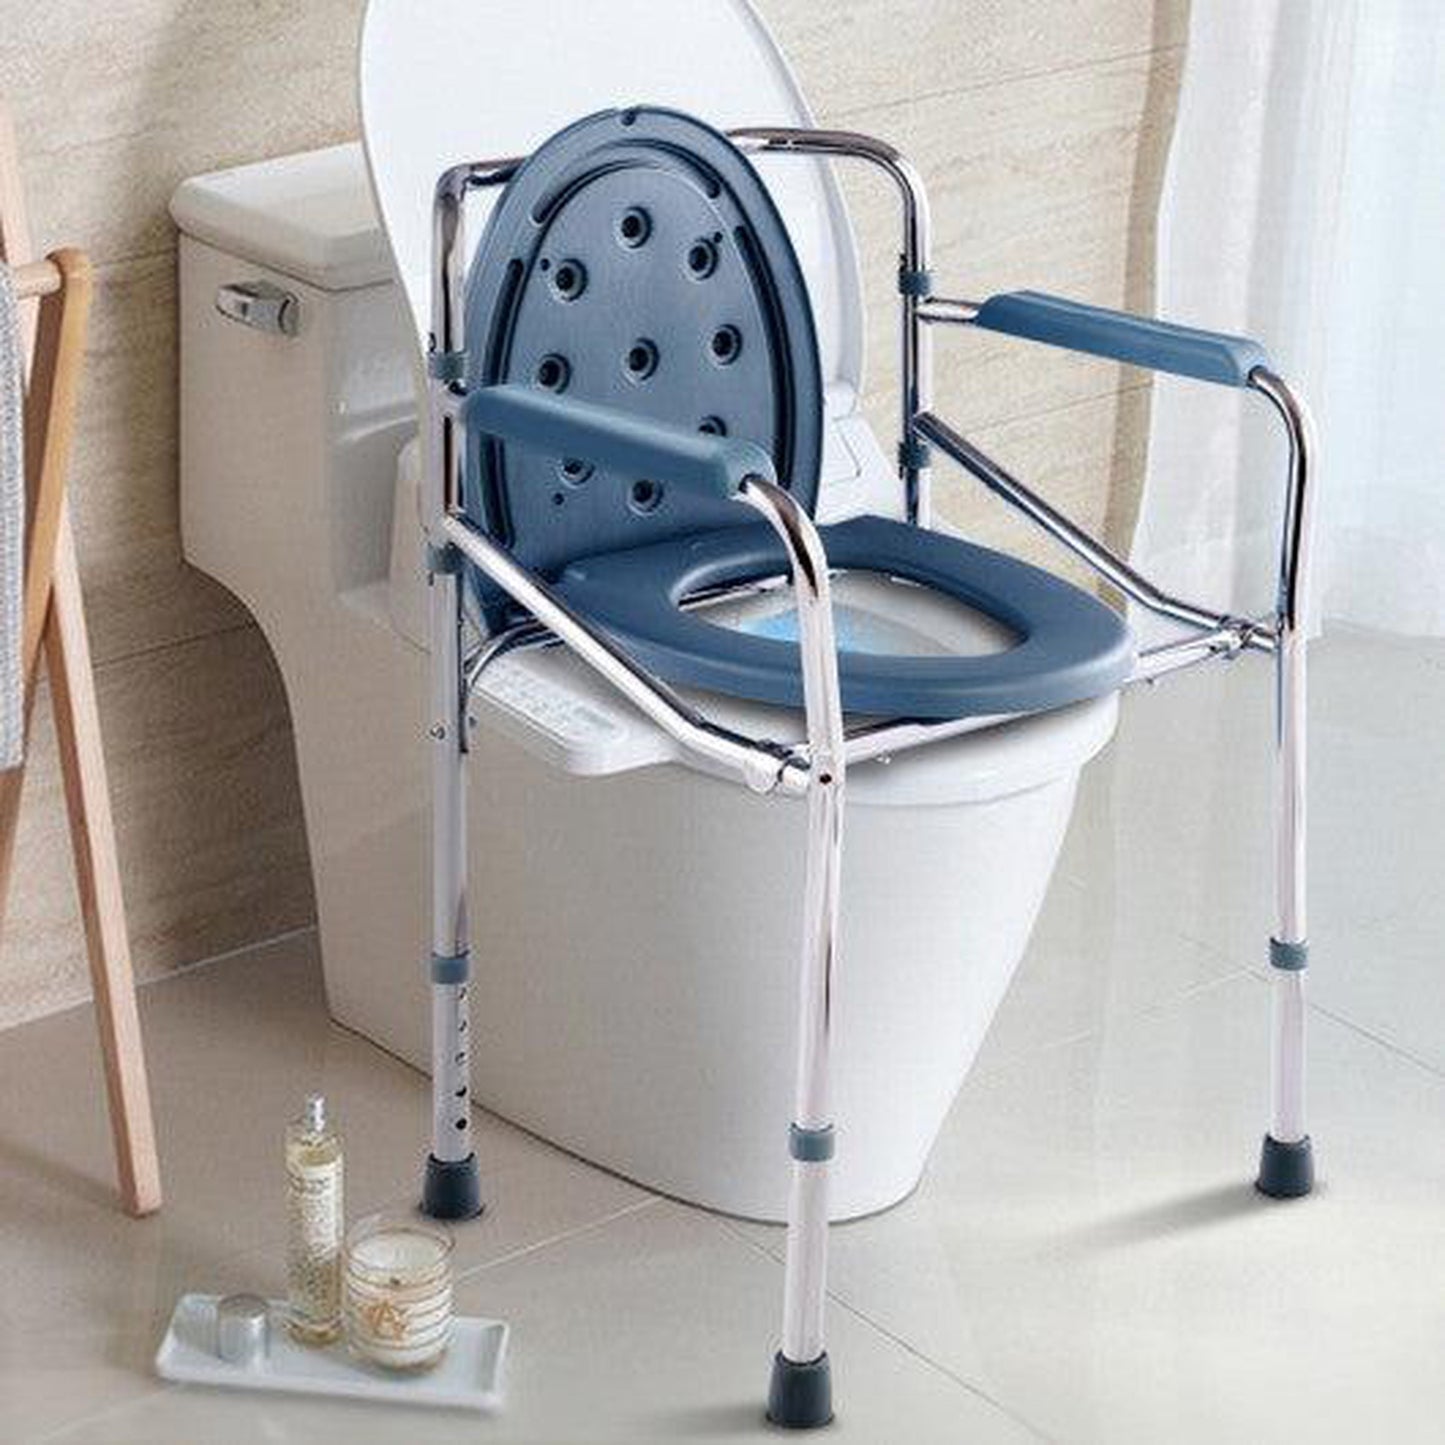 Costway Adjustable Folding Toilet Chair with Bucket Splash Guard